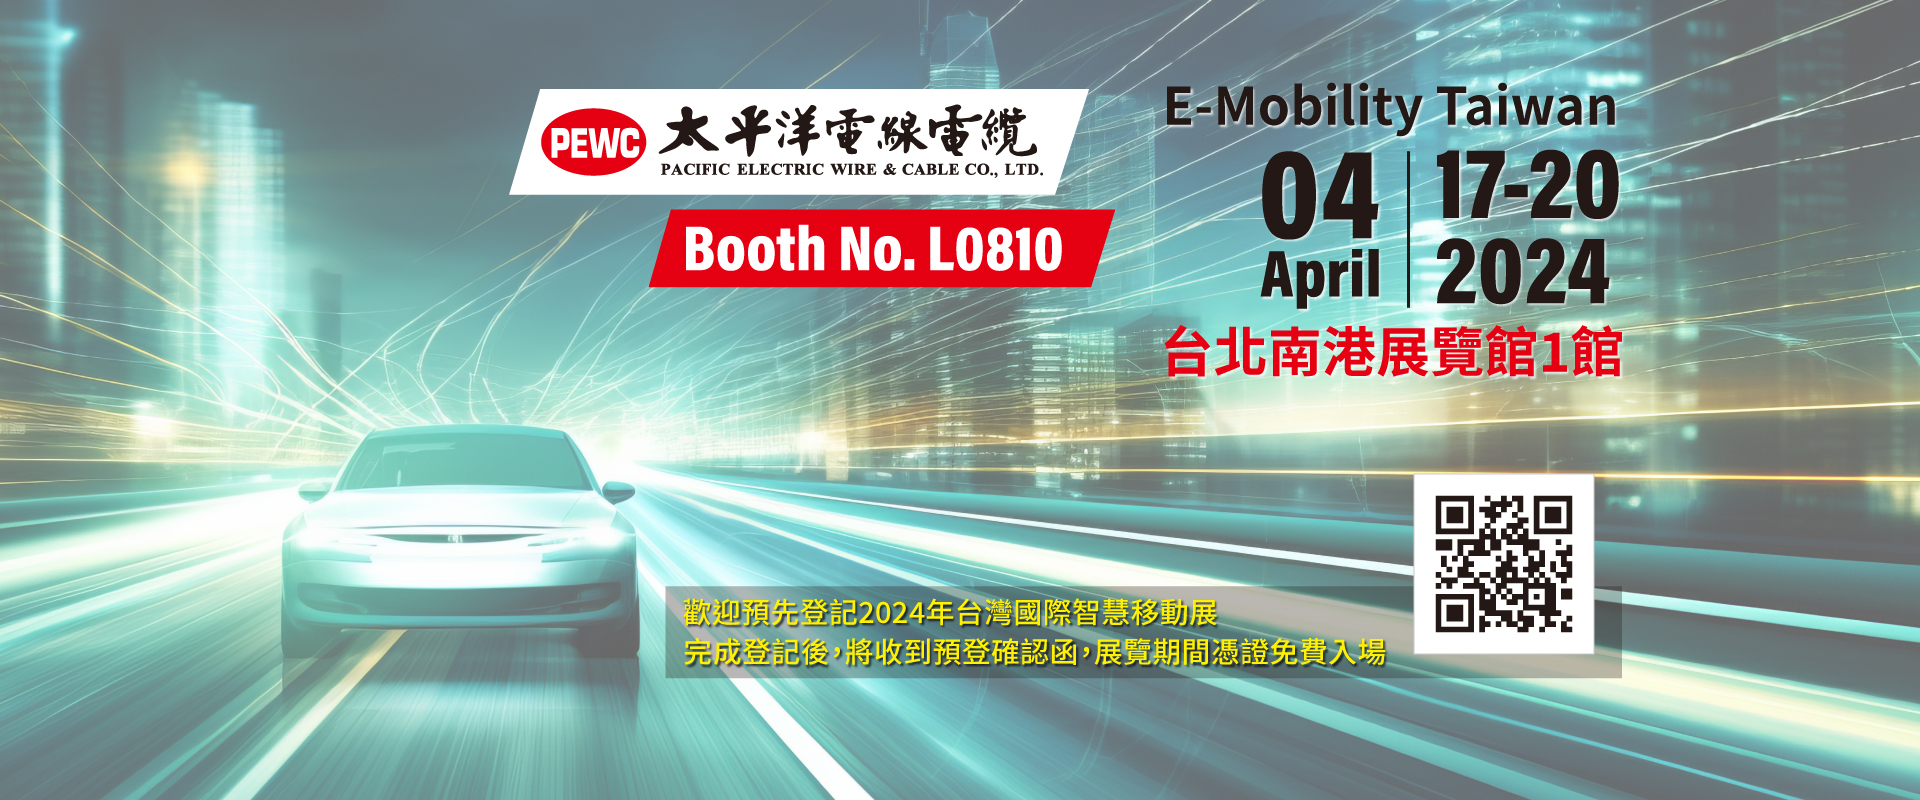 E-Mobility Taiwan